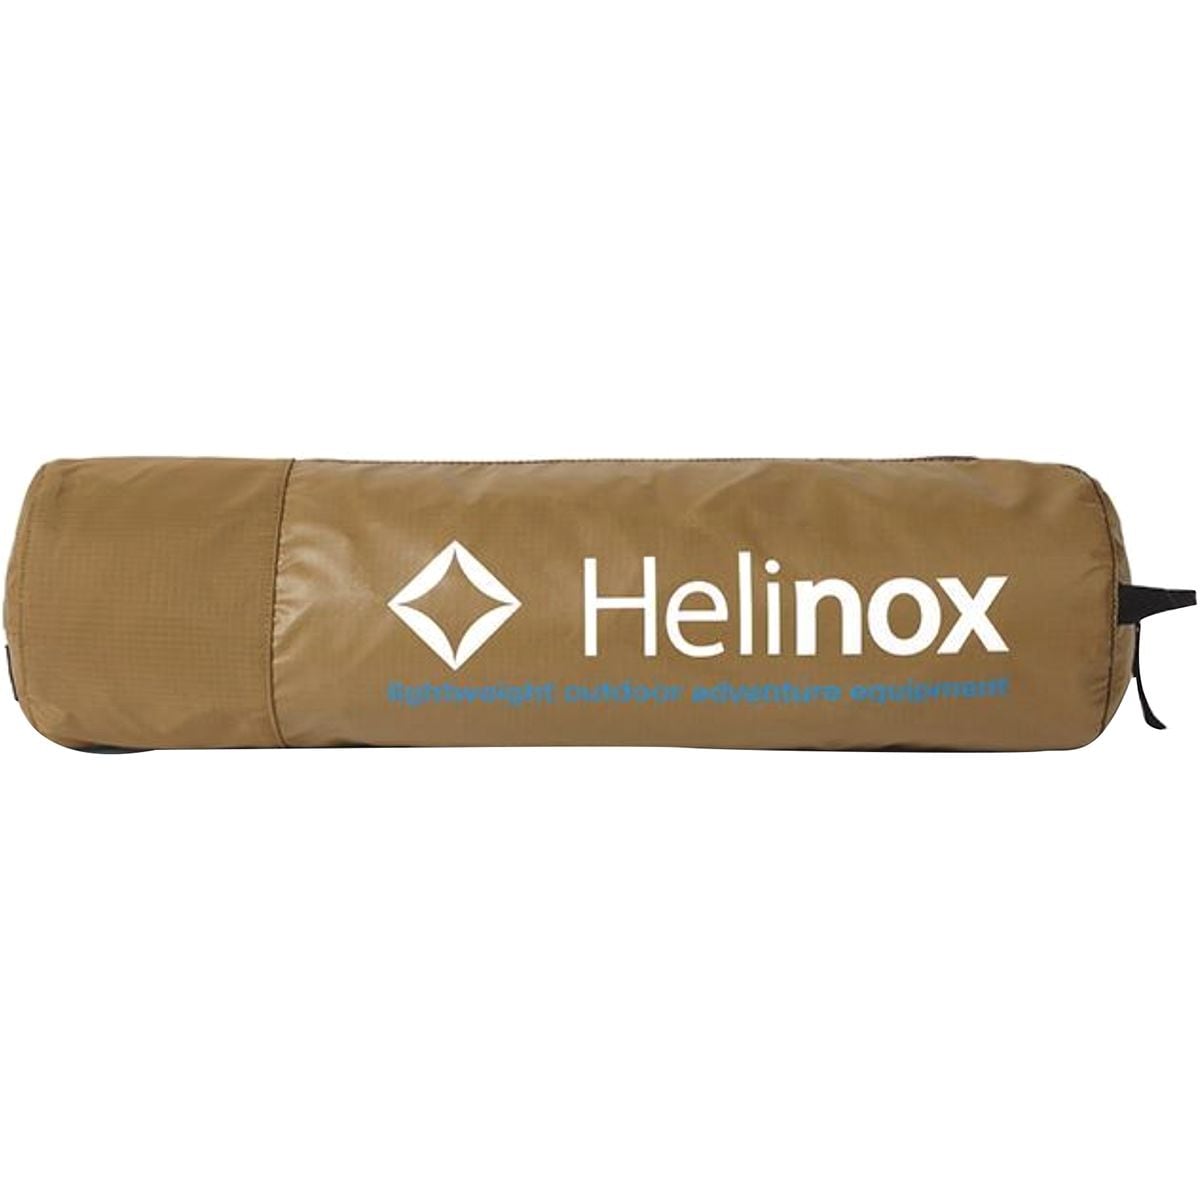 helinox cot one sale